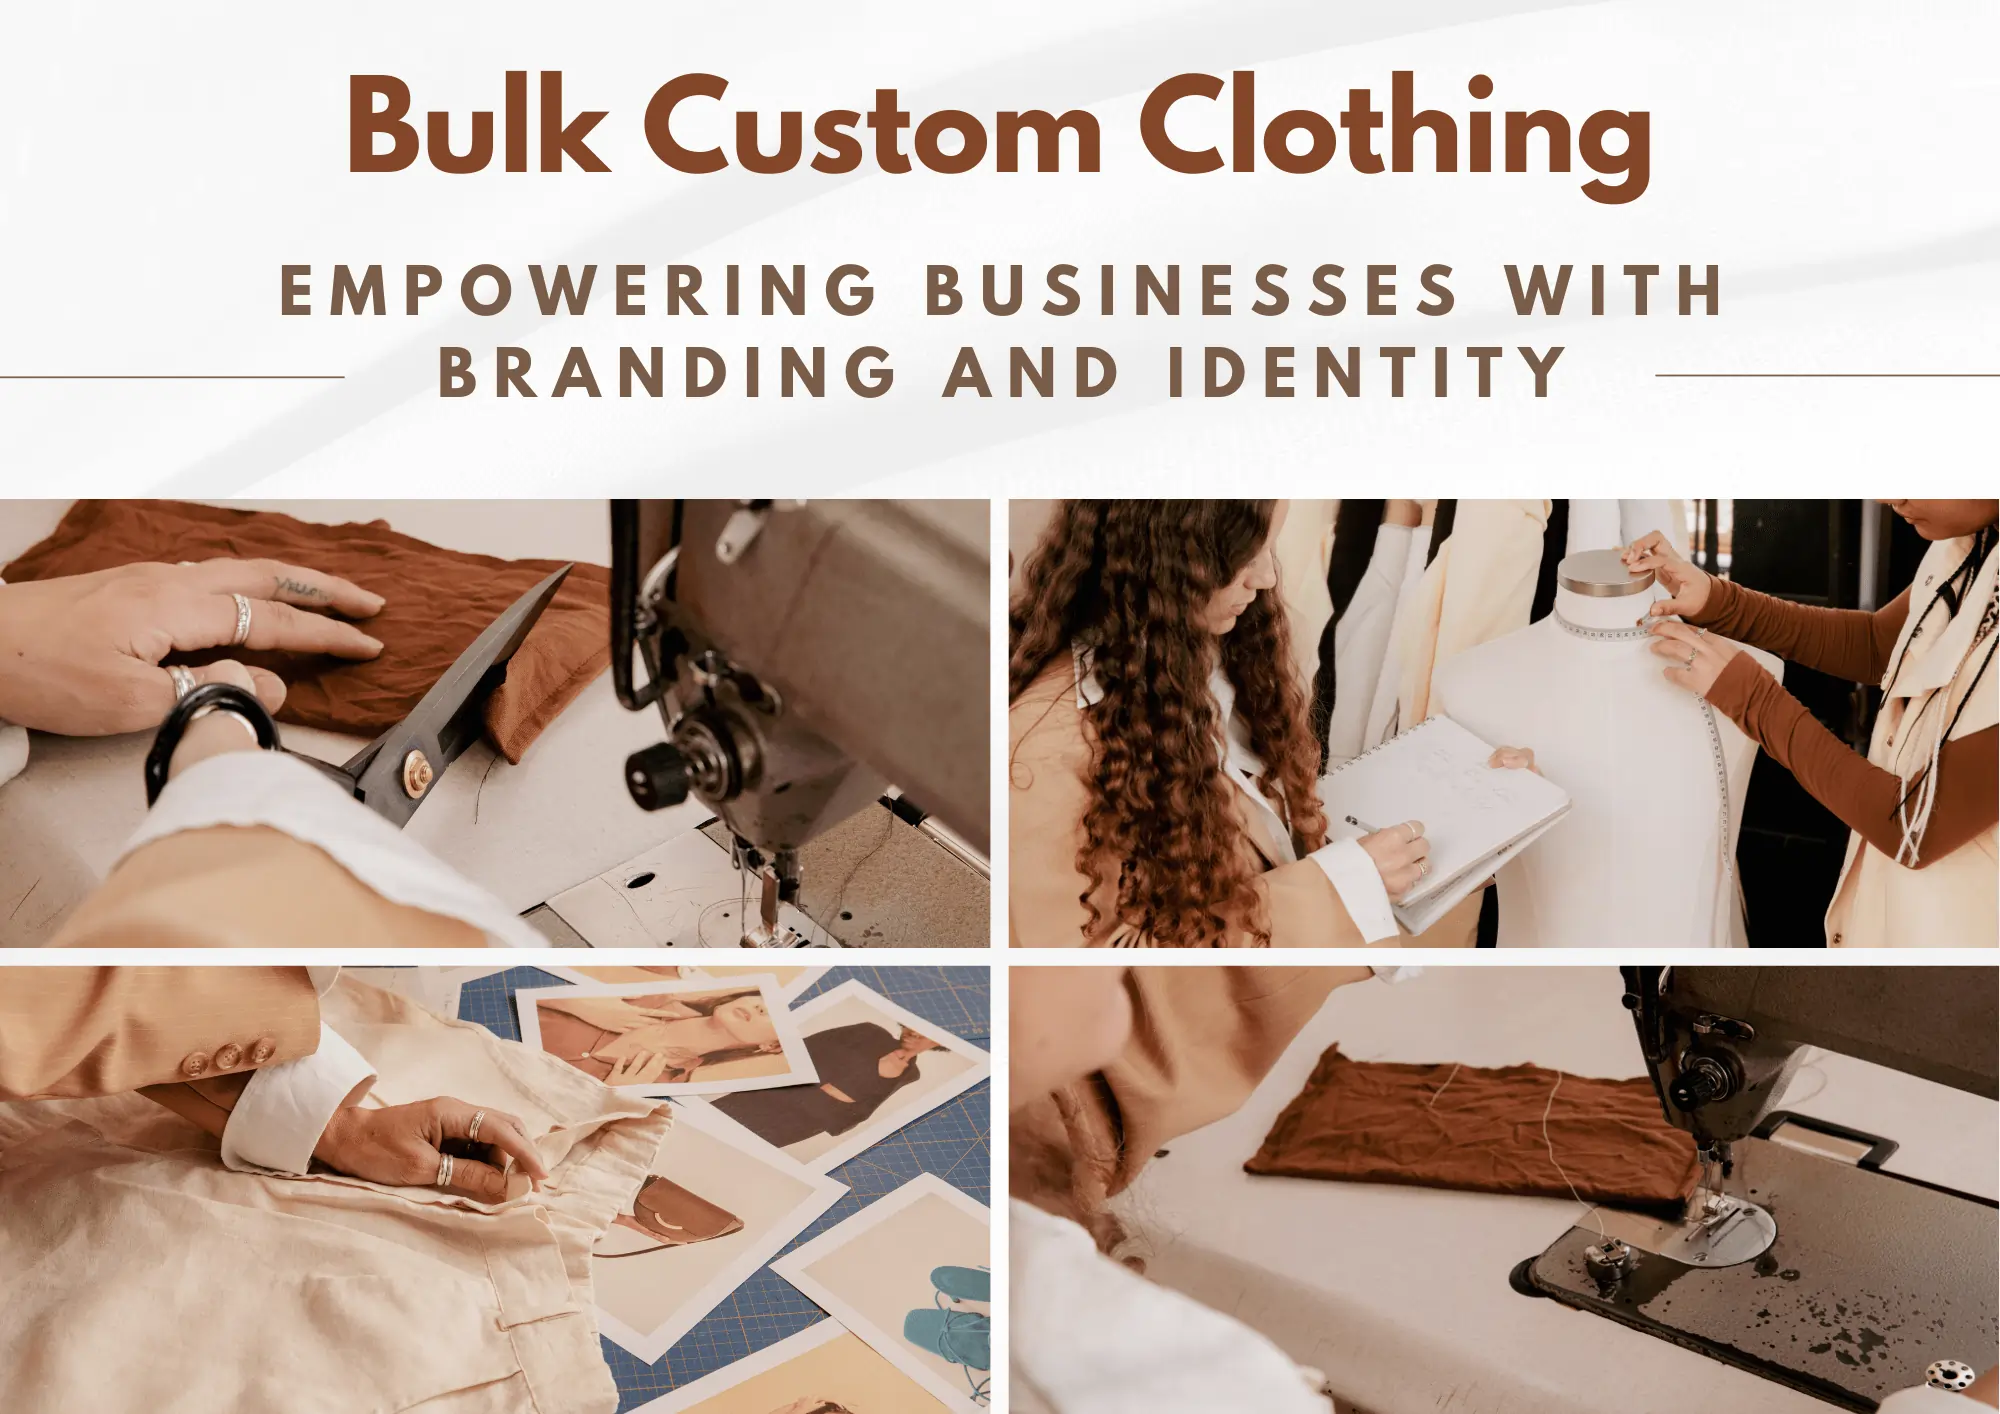 Bulk custom clothing